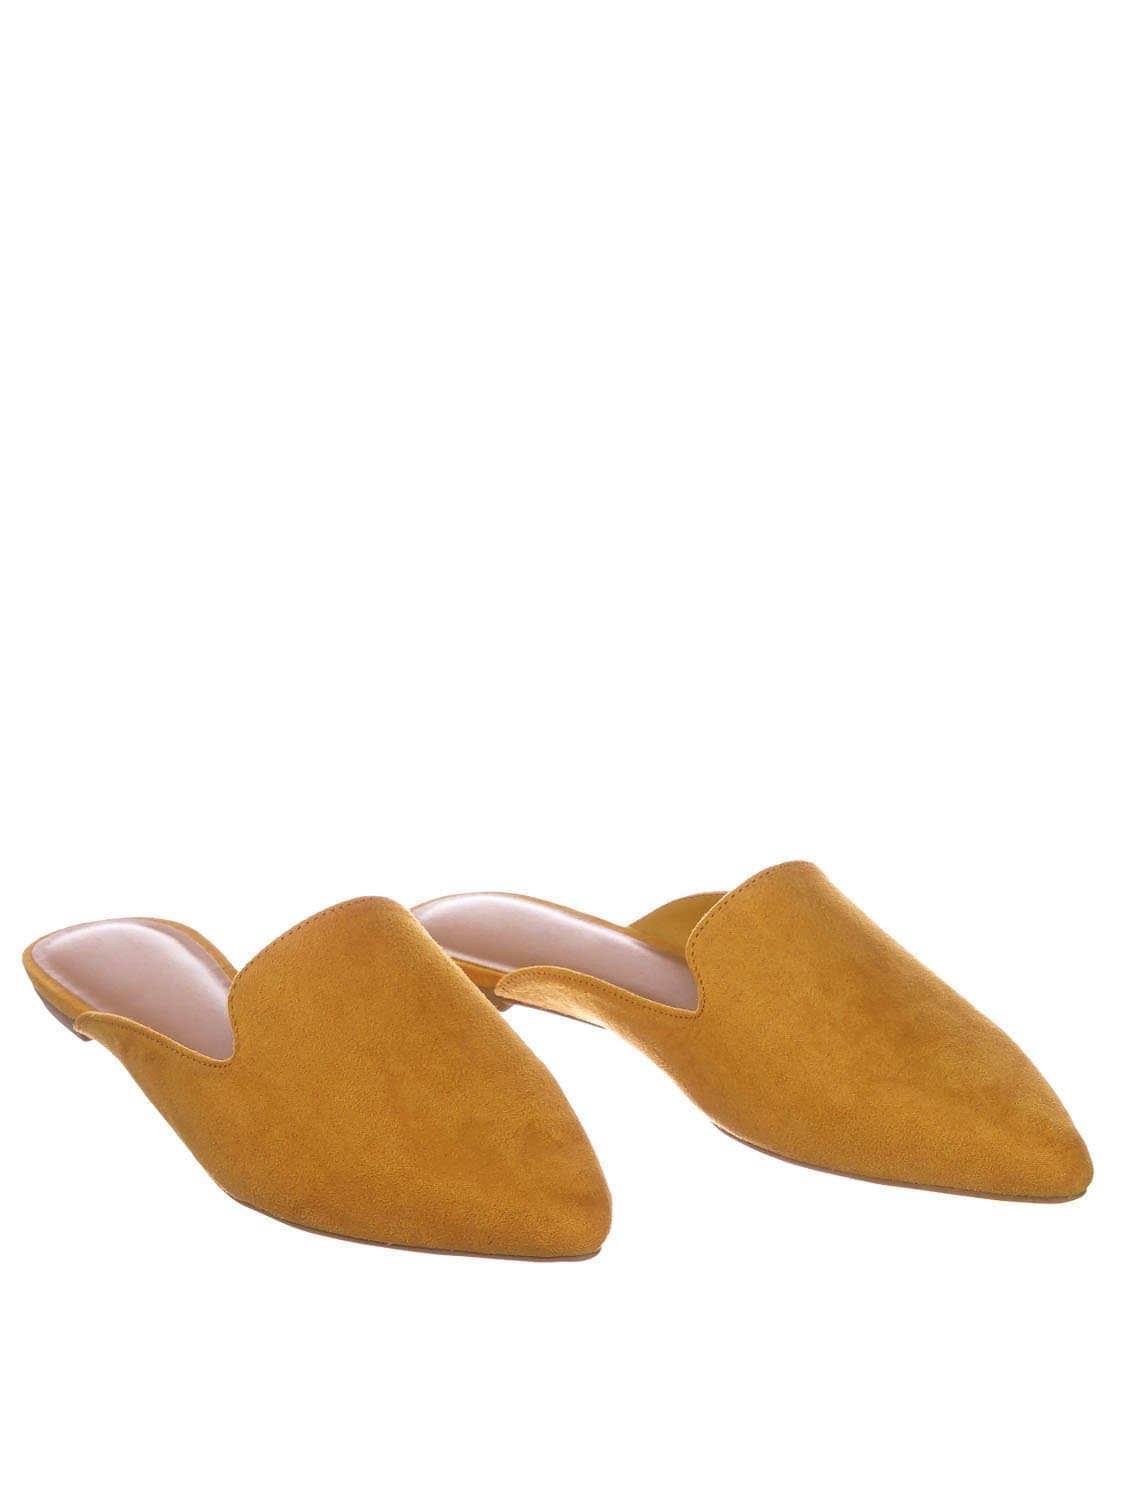 Mustard Yellow / Blog44 Slip On Mule Slippers - Women Flat Backless Pointed Toe Pump